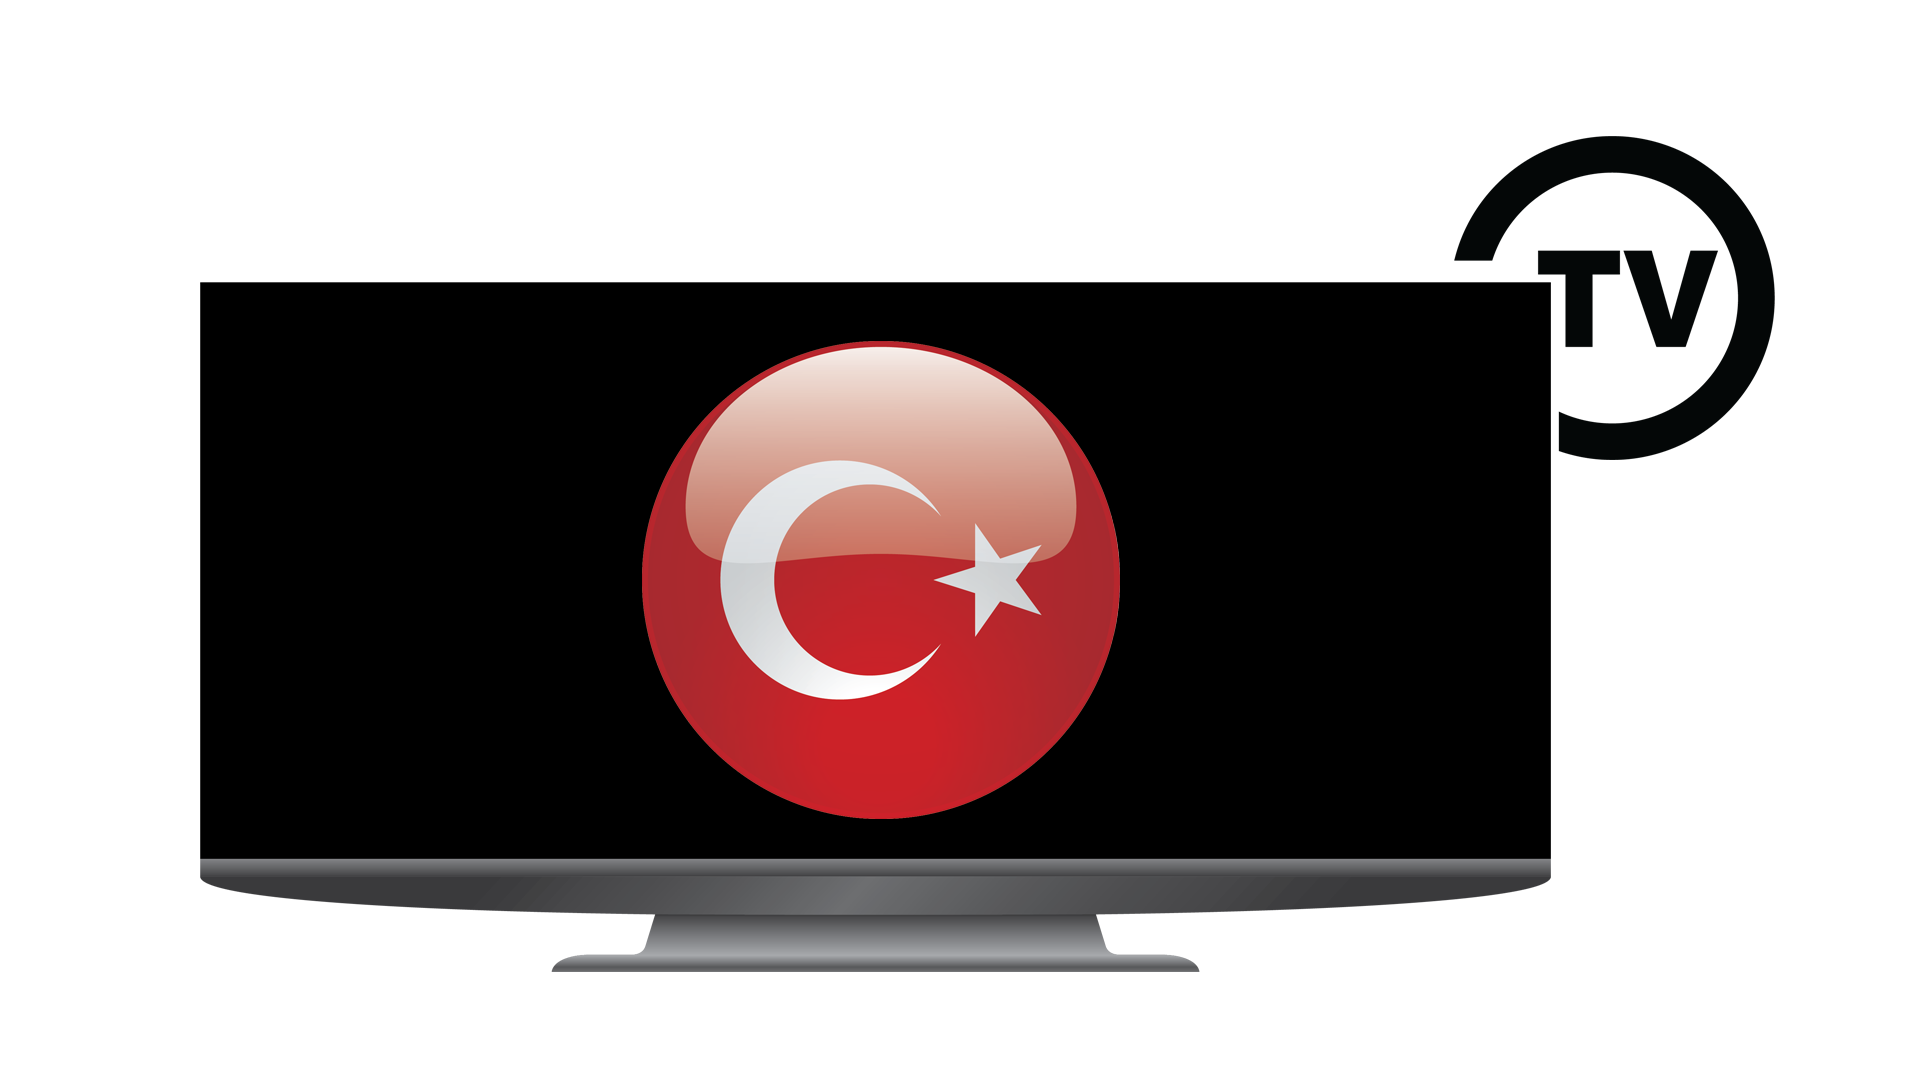 Туркиш ТВ. Turkish TV. Turk TV. Media Turk TV. Tr turkish tv